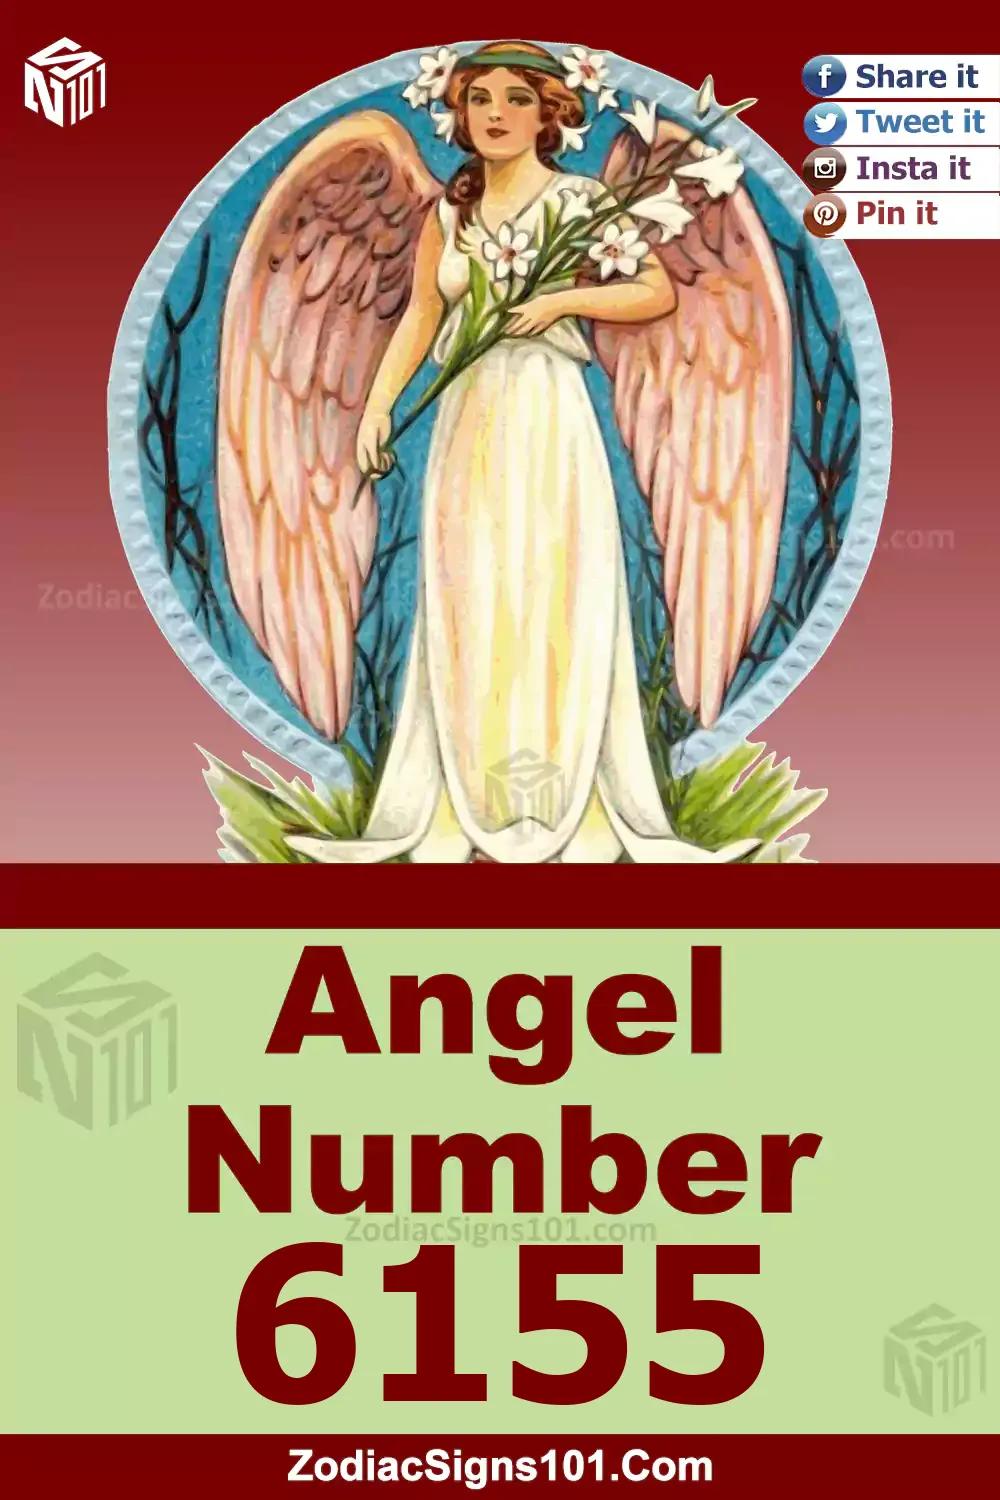 6155-Angel-Number-Meaning.jpg